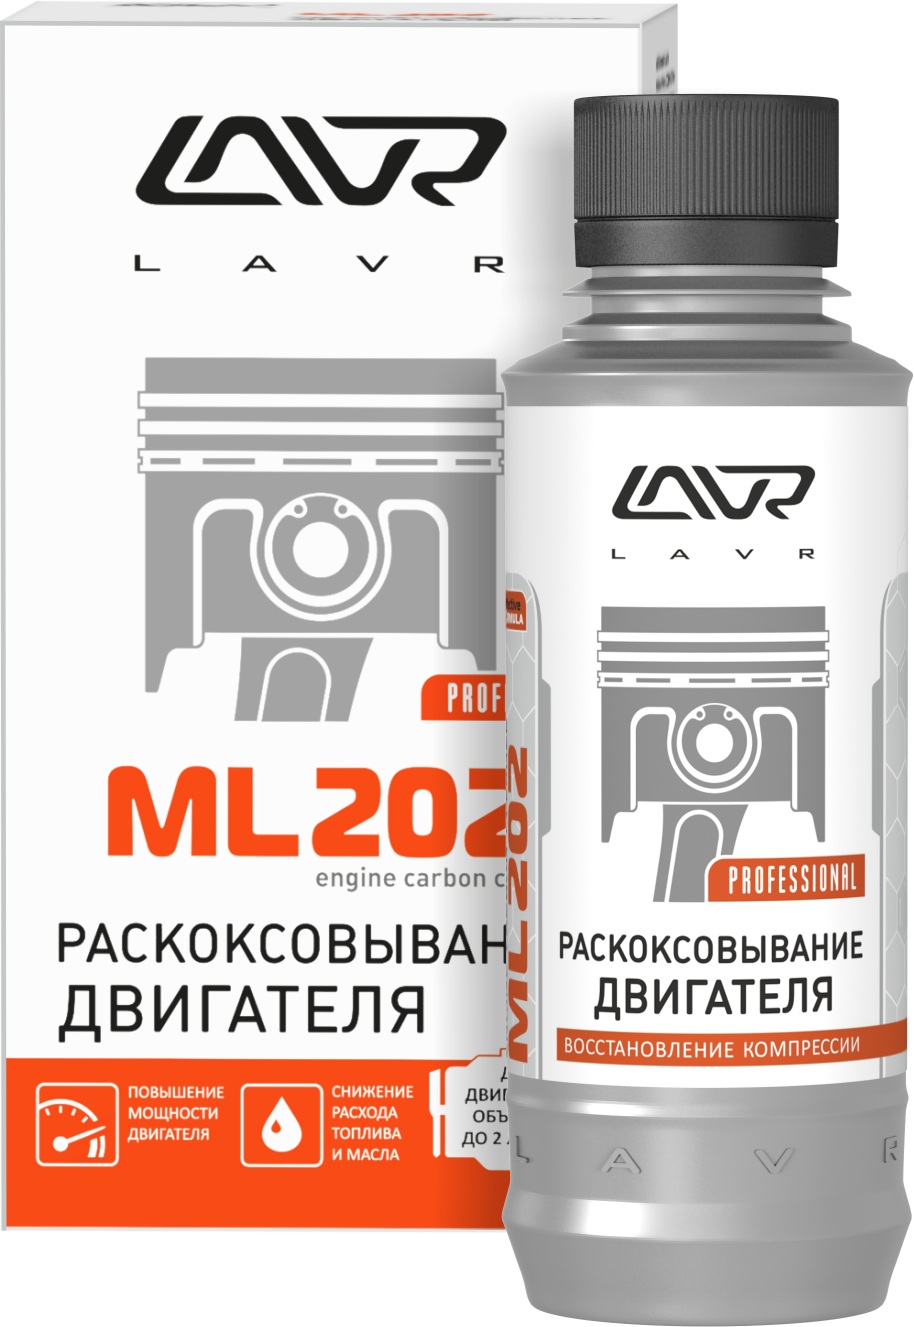 LAVR - Раскоксовывание двигателя  ML-202 (для двигателей до 2-х литров) LAVR Engine carbon cleaner 185мл